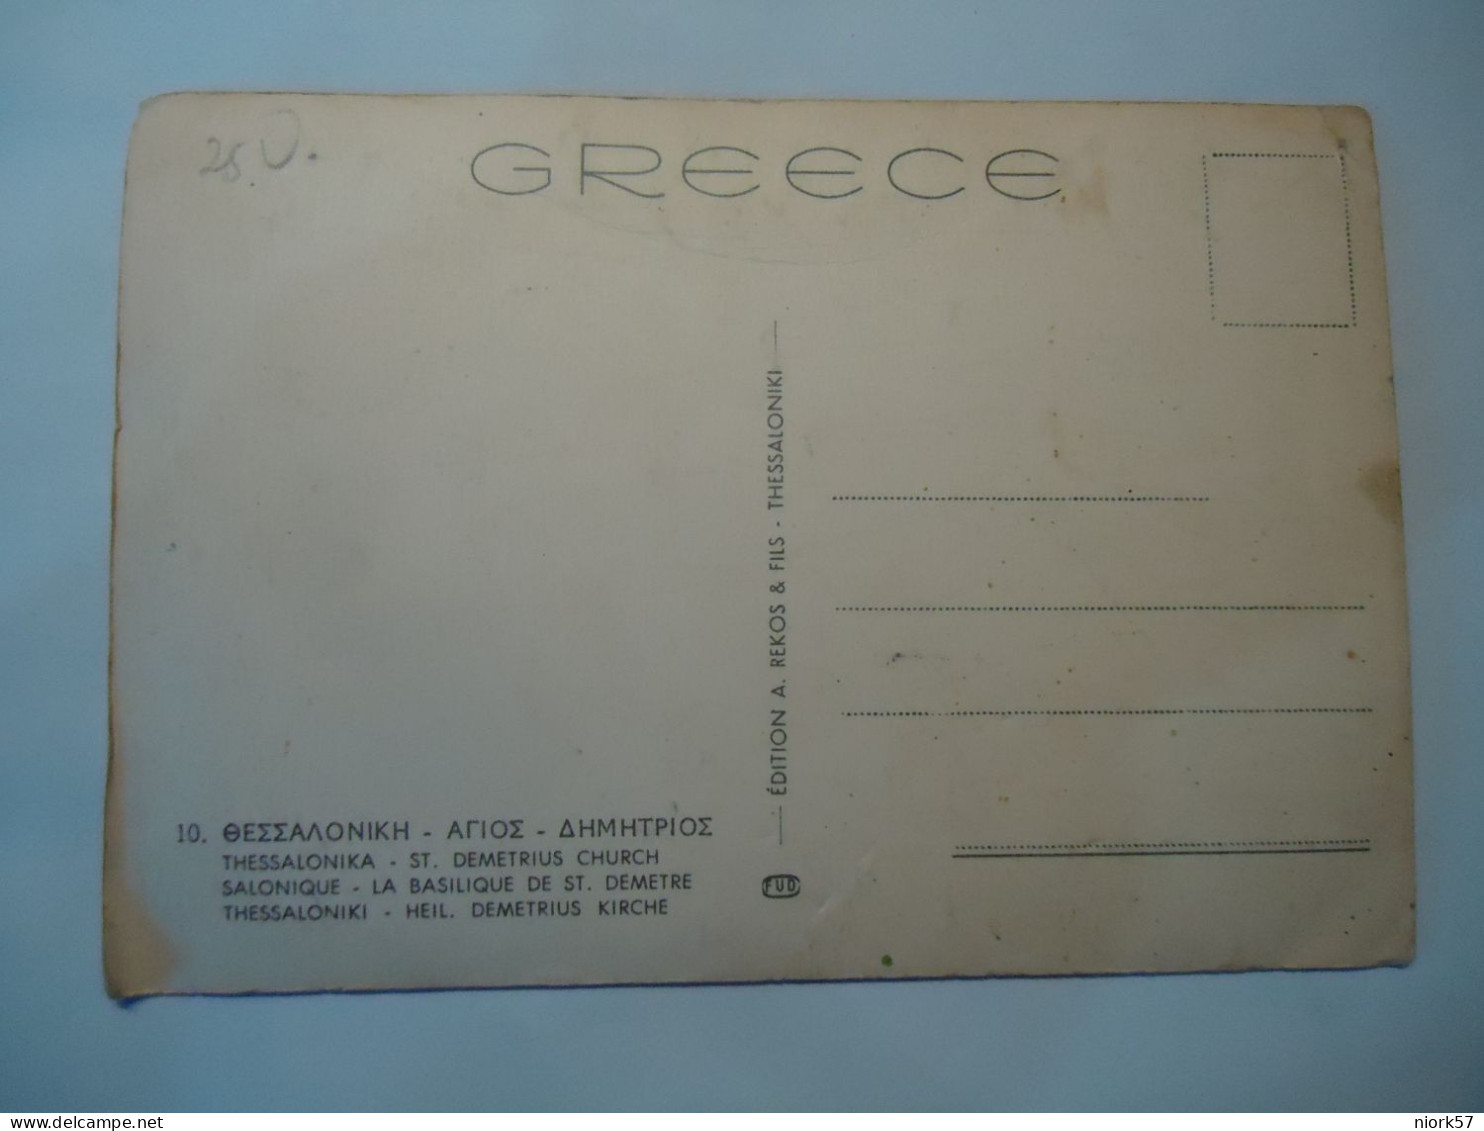 GREECE  POSTCARDS ΘΕΣΣΑΛΟΝΙΚΗ  ΑΓΙΟΣ ΔΗΜΗΤΡΙΟΣ - Griechenland